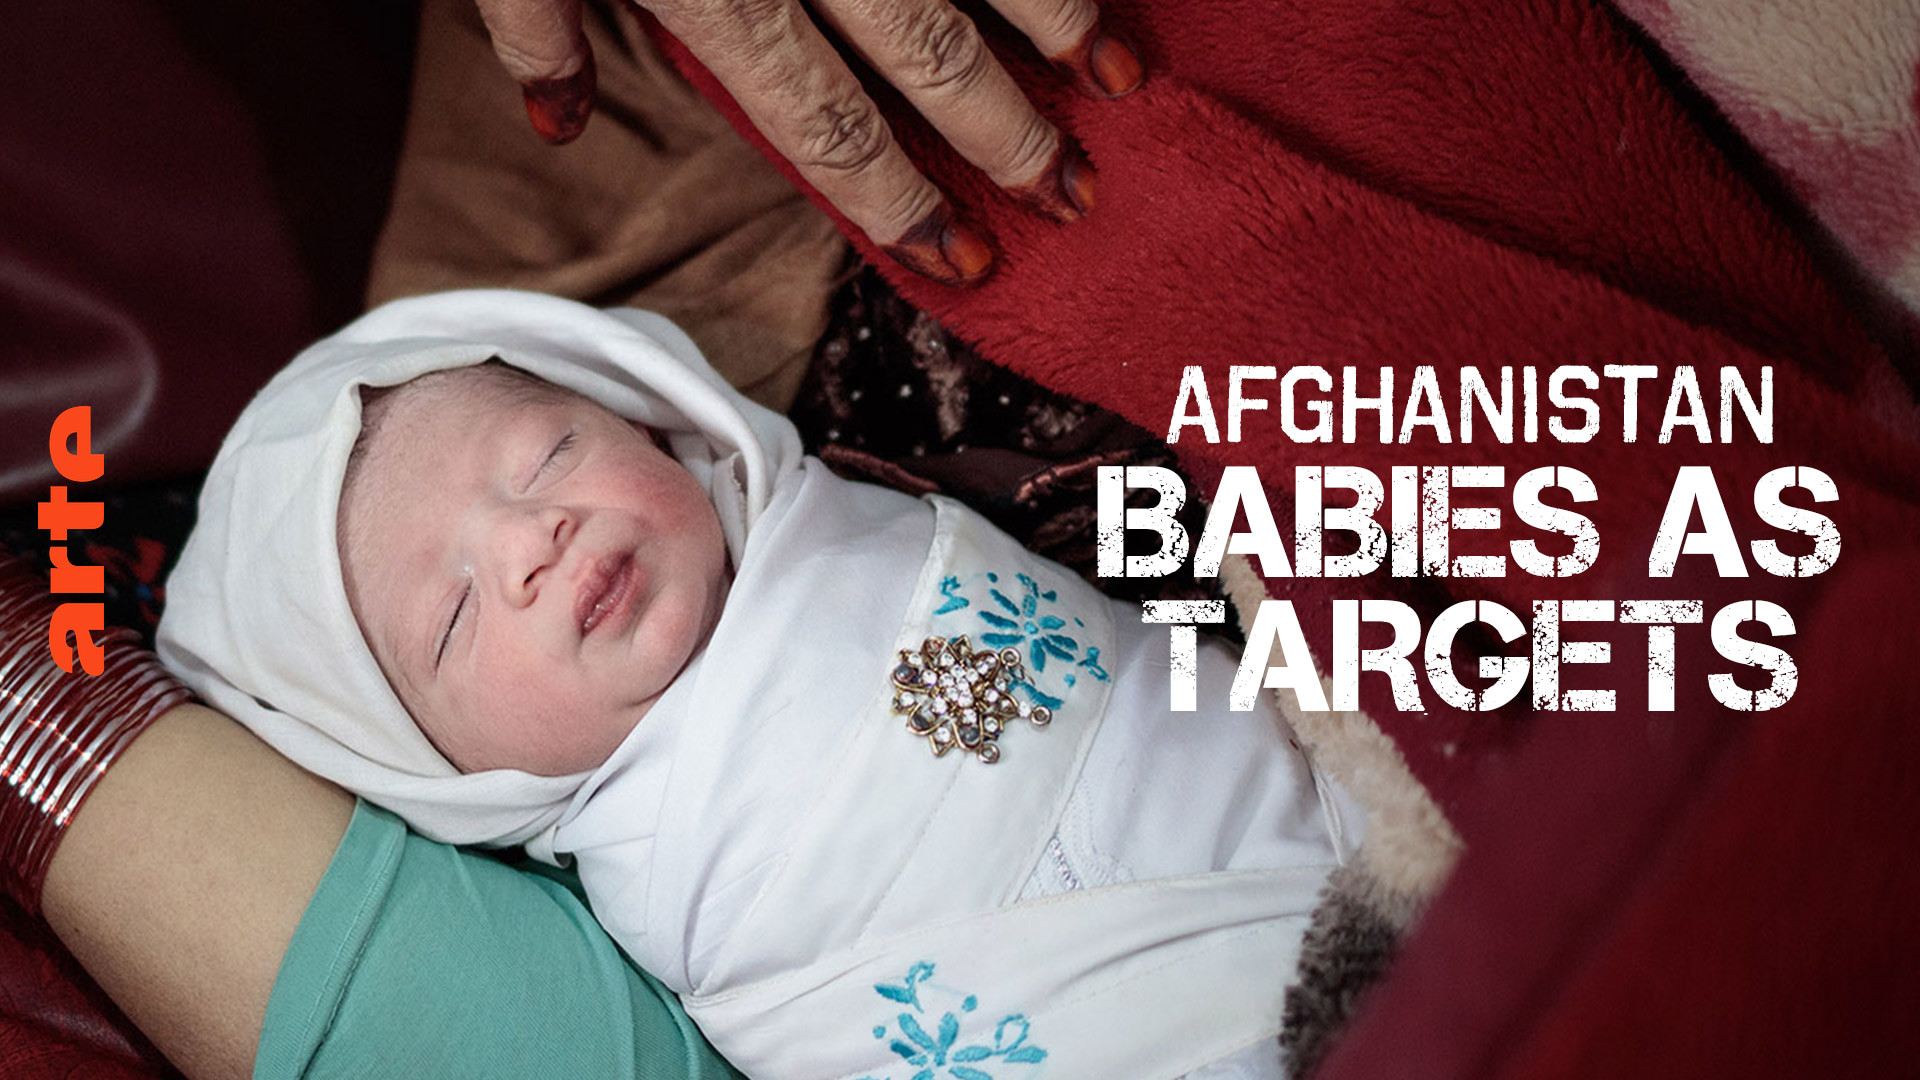 Sleeping Fuck Of Nigerian - ARTE Reportage - Afghanistan: Babies as Targets - Watch the full  documentary | ARTE in English